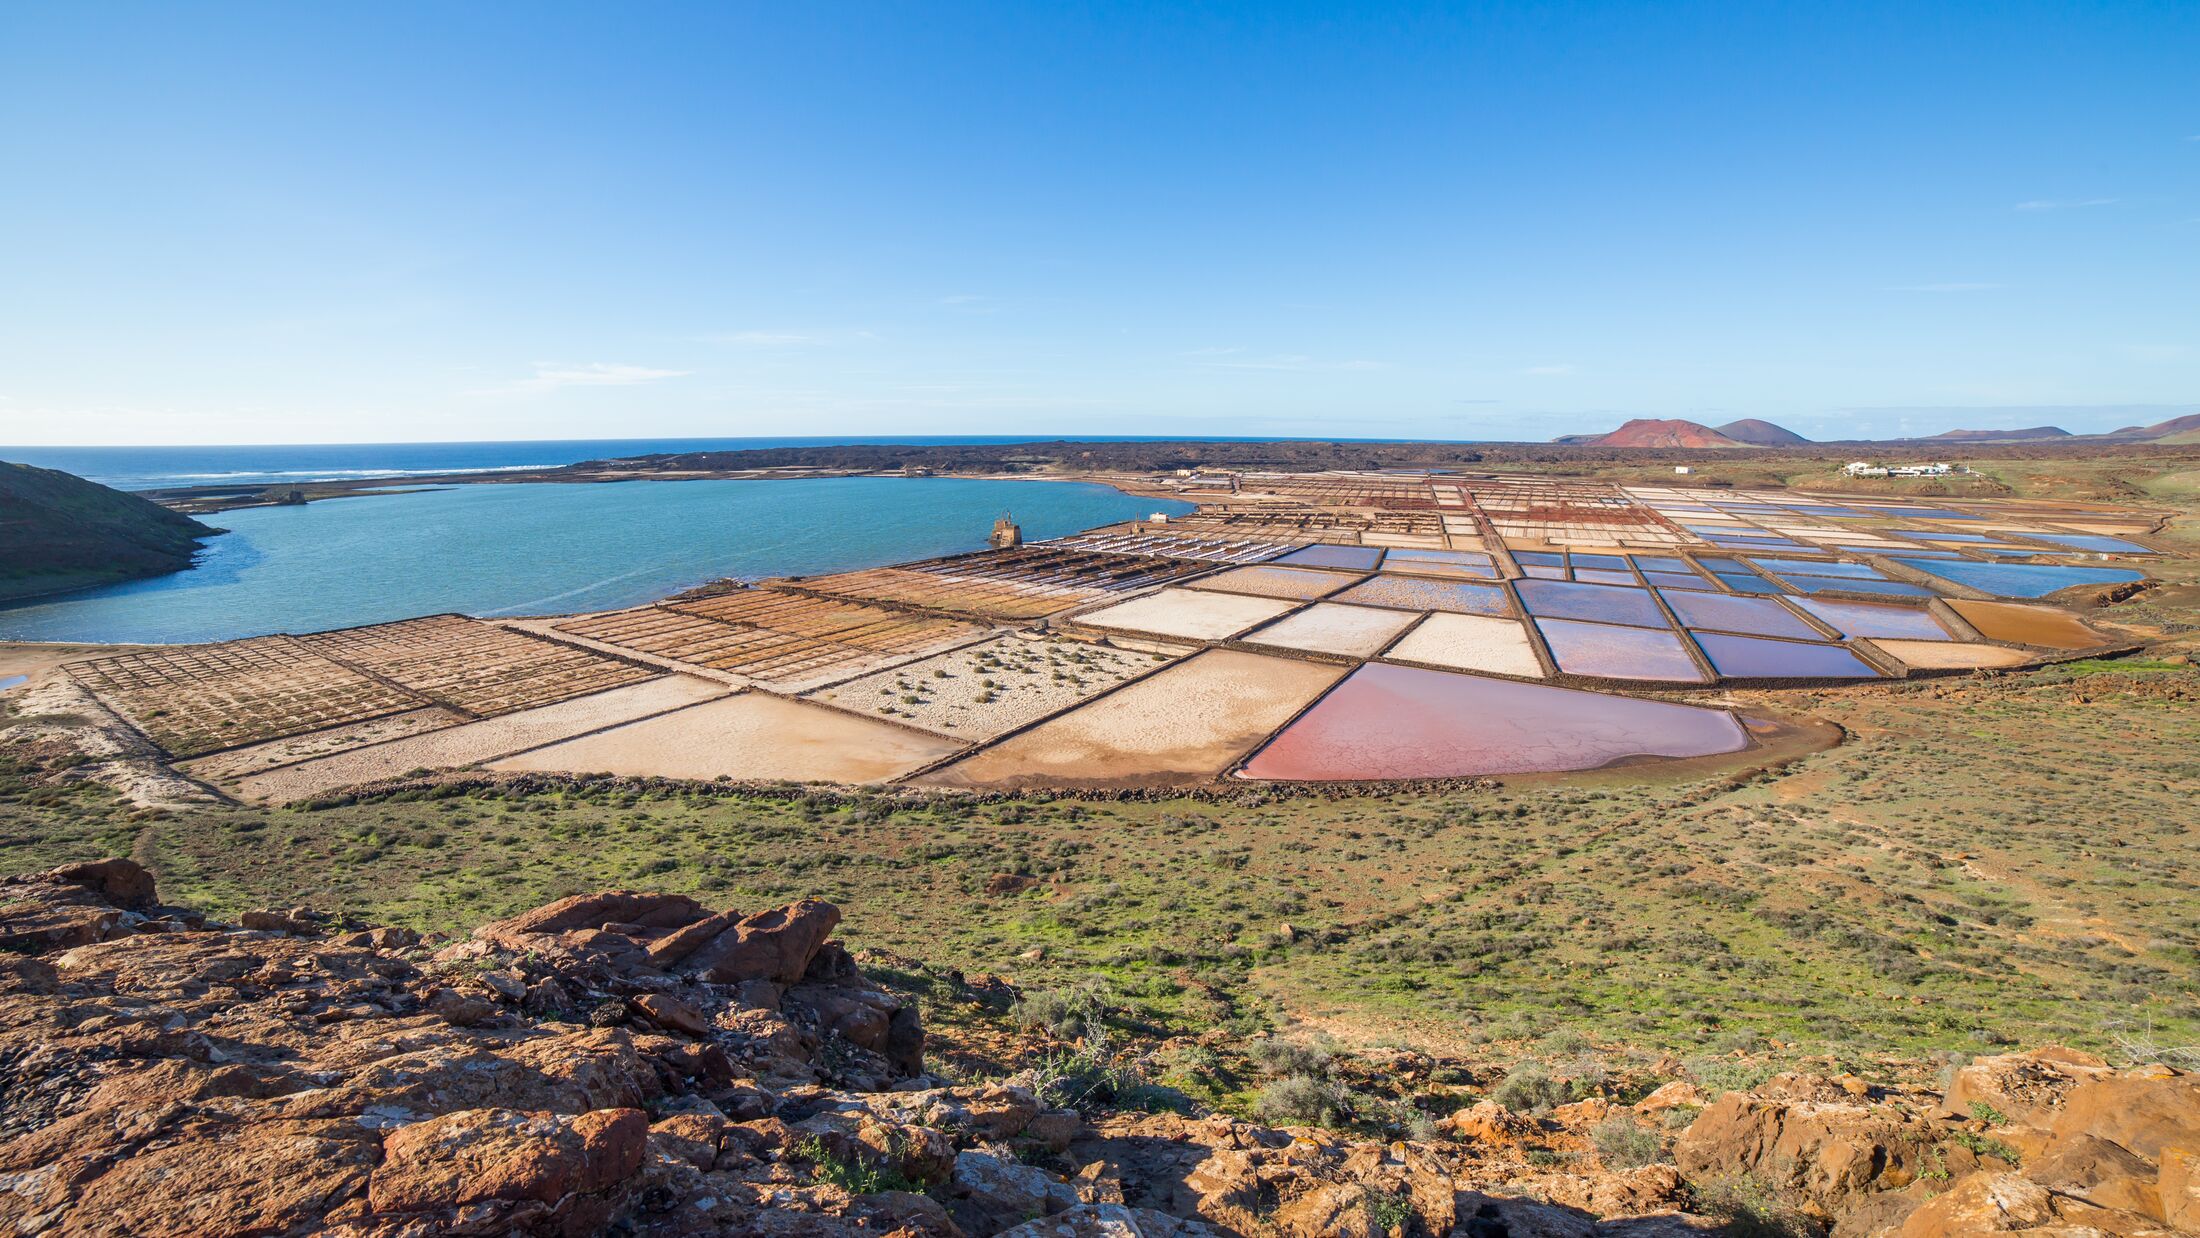 Playa de Janubio, behind which are Las Salinas de Janubio, salt pans from where sea salt is extracted, in Lanzarote, Canary Islands, in Spain